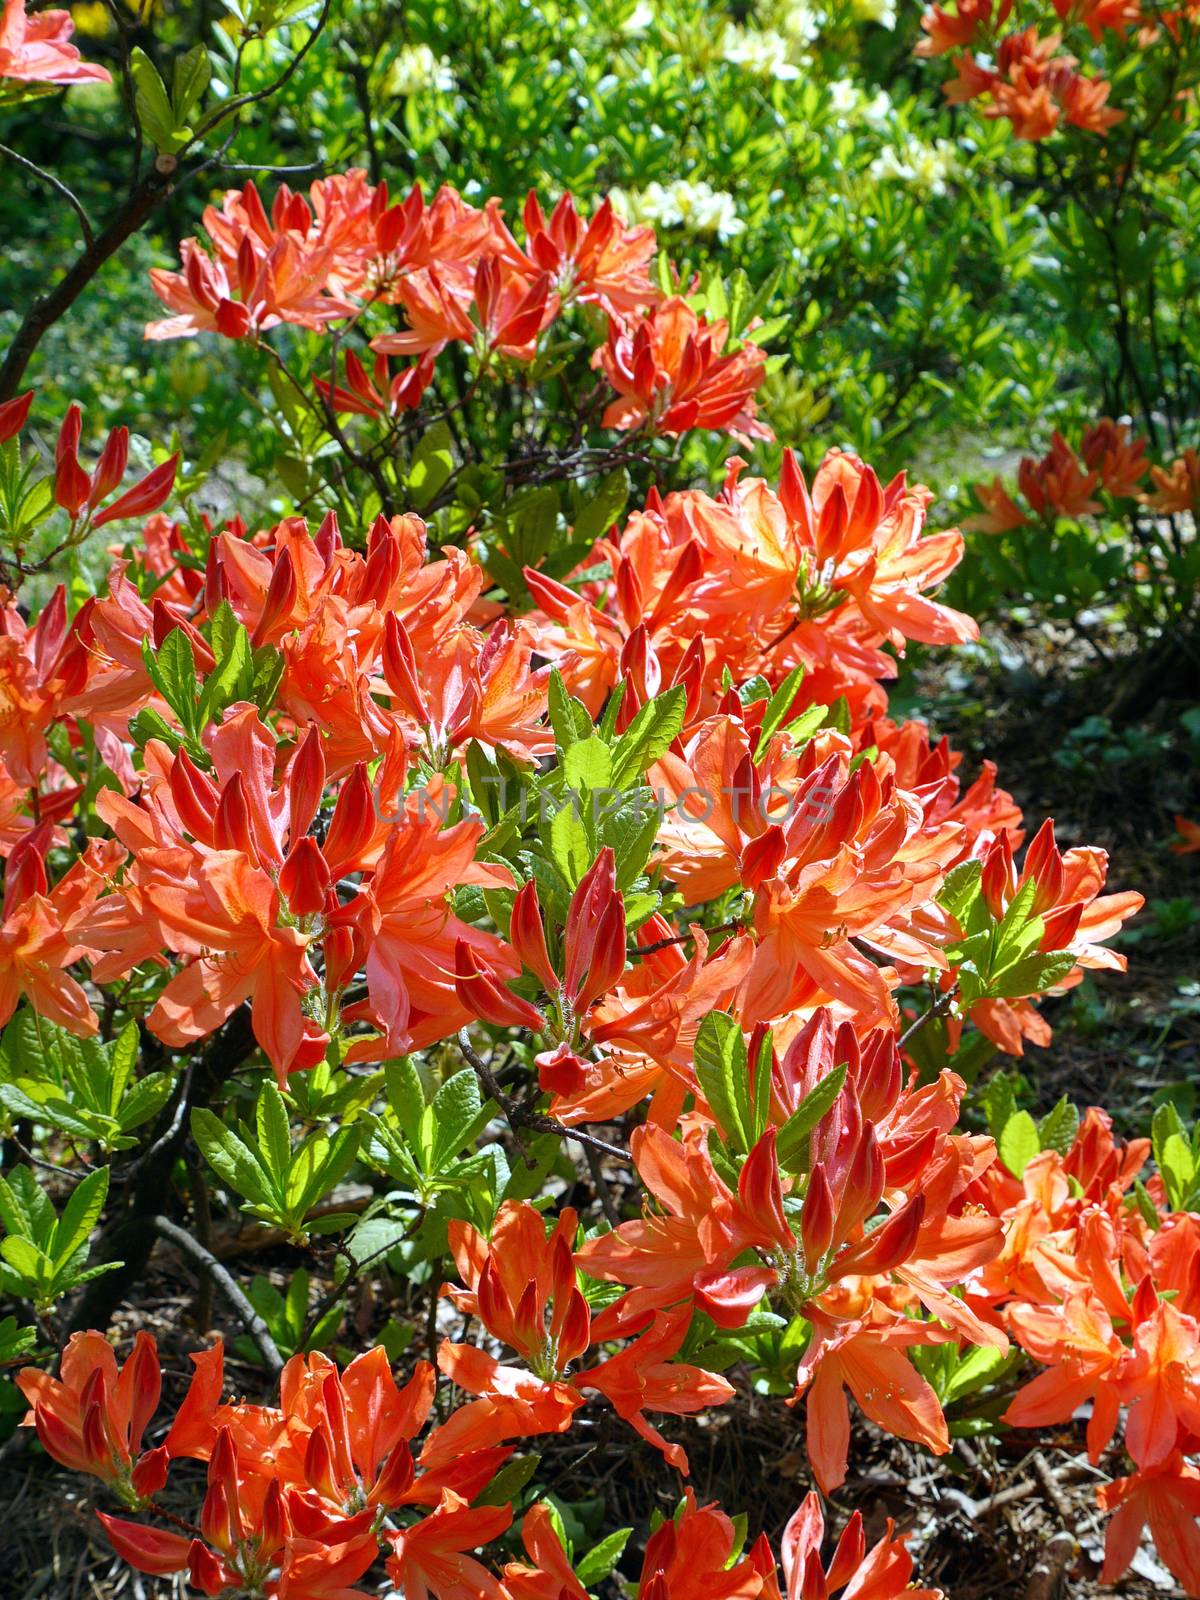 Dense, beautiful orange magnolia inflorescences in the park are illuminated by sunshine by Adamchuk